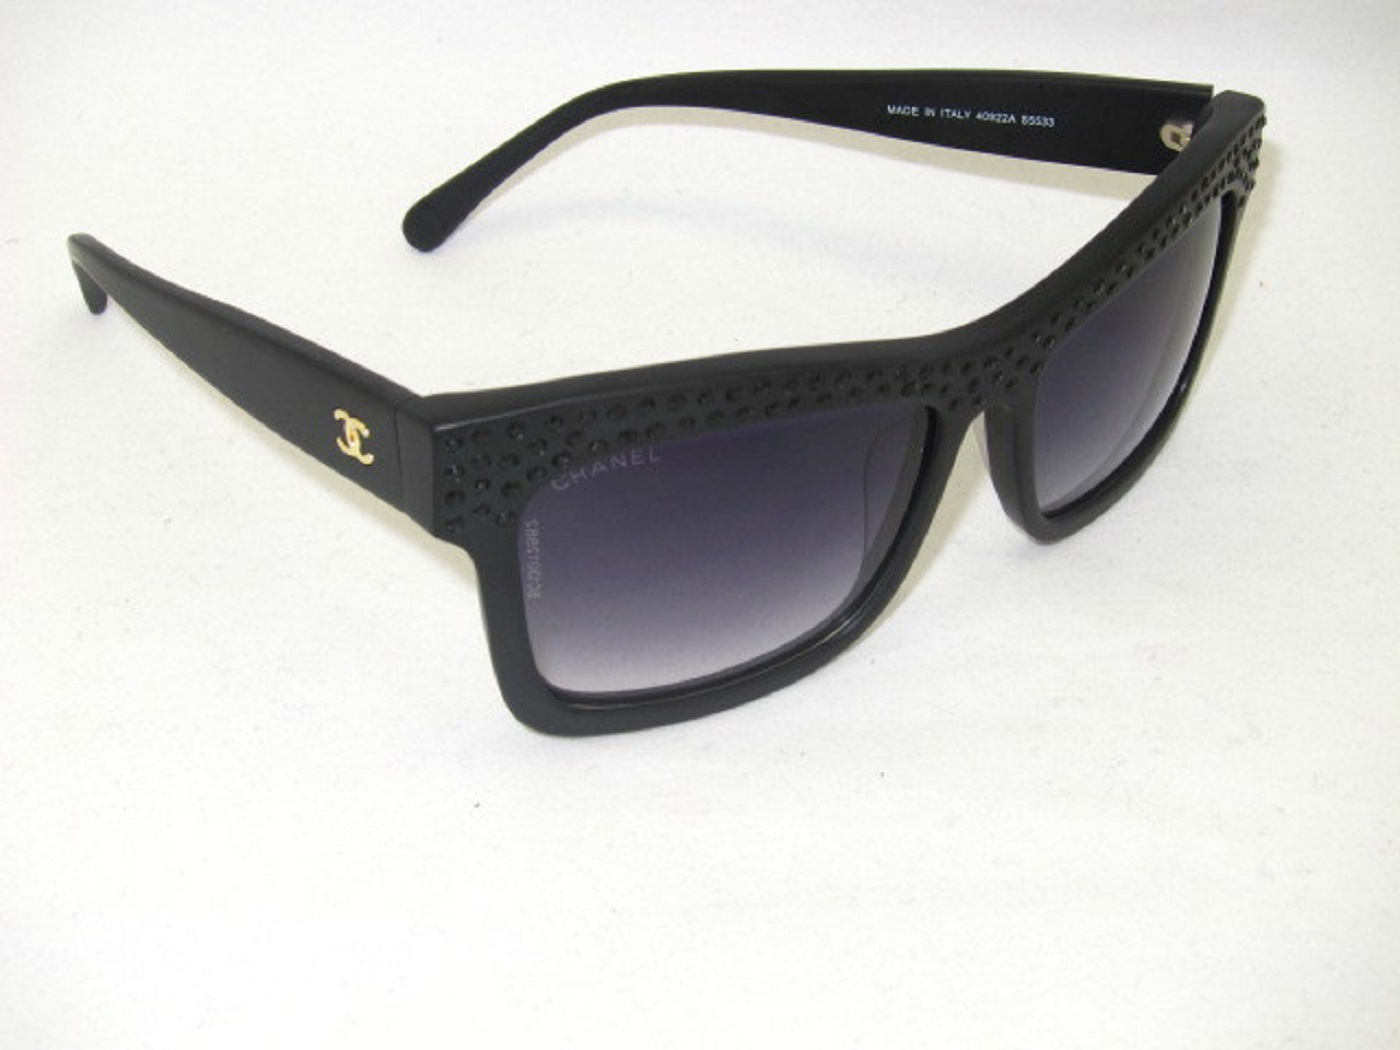 How to spot fake Chanel sunglasses | Lentiamo